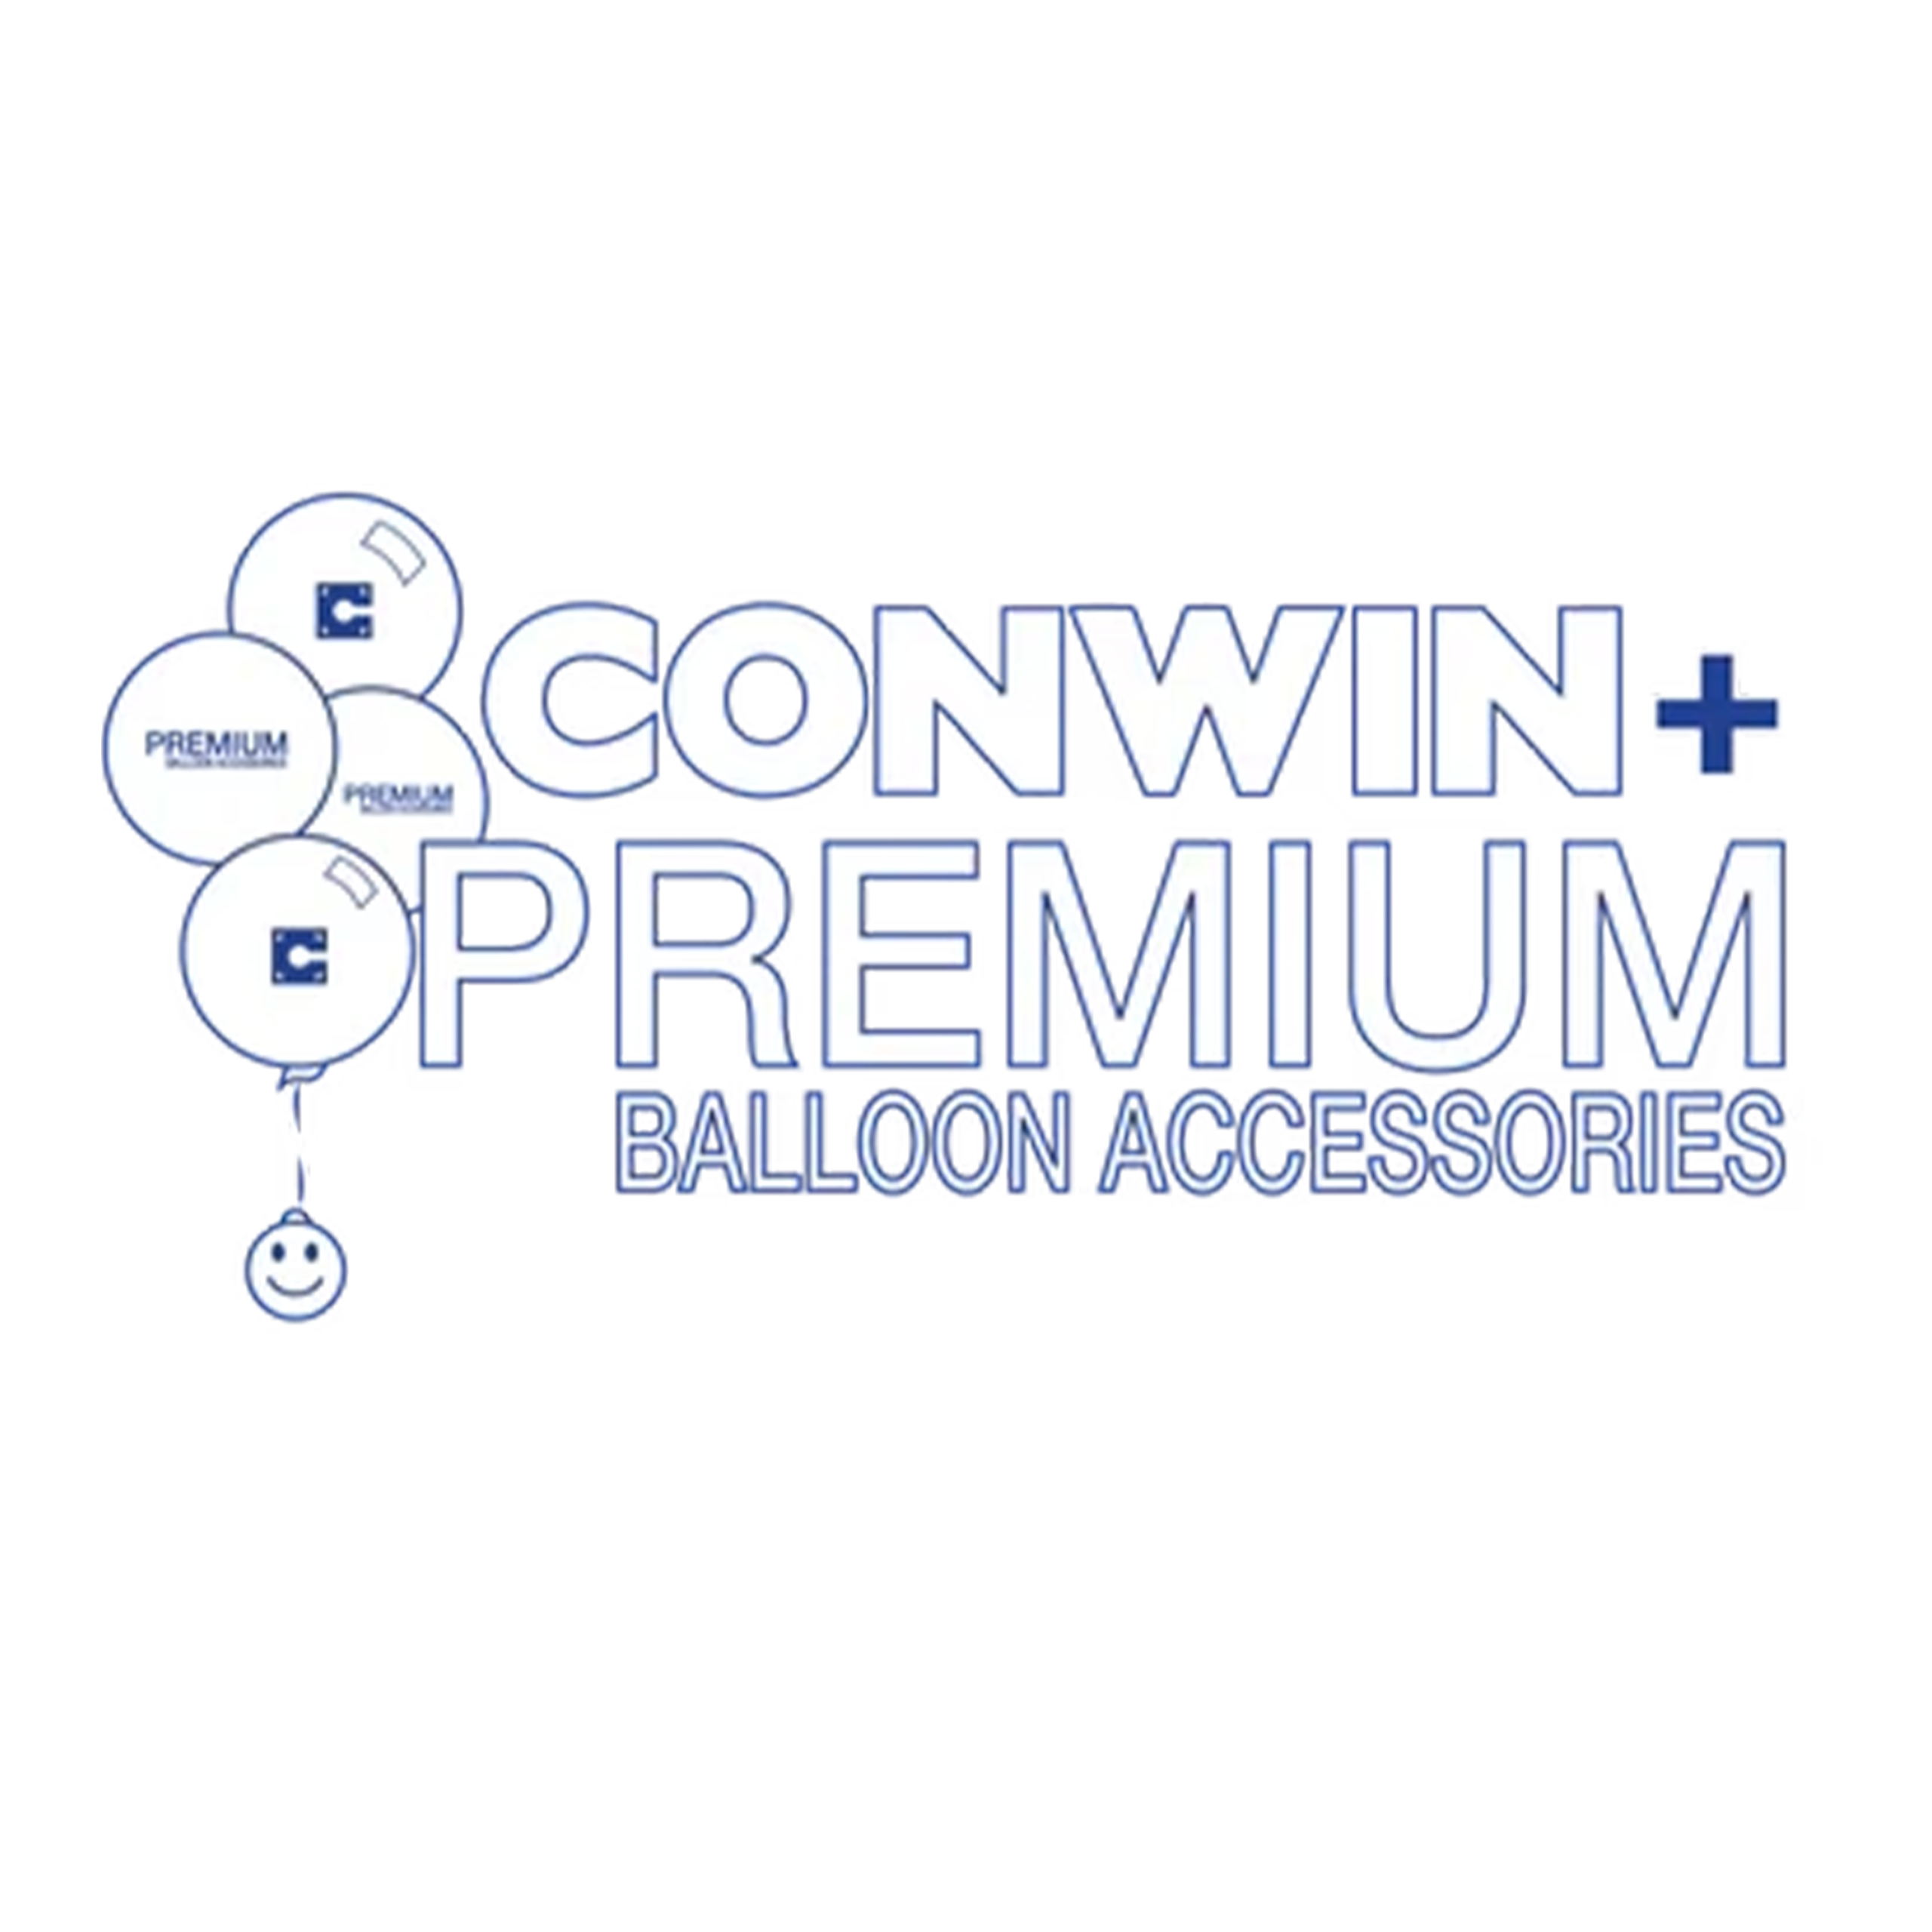 Ribbon Cutter - PremiumConwin